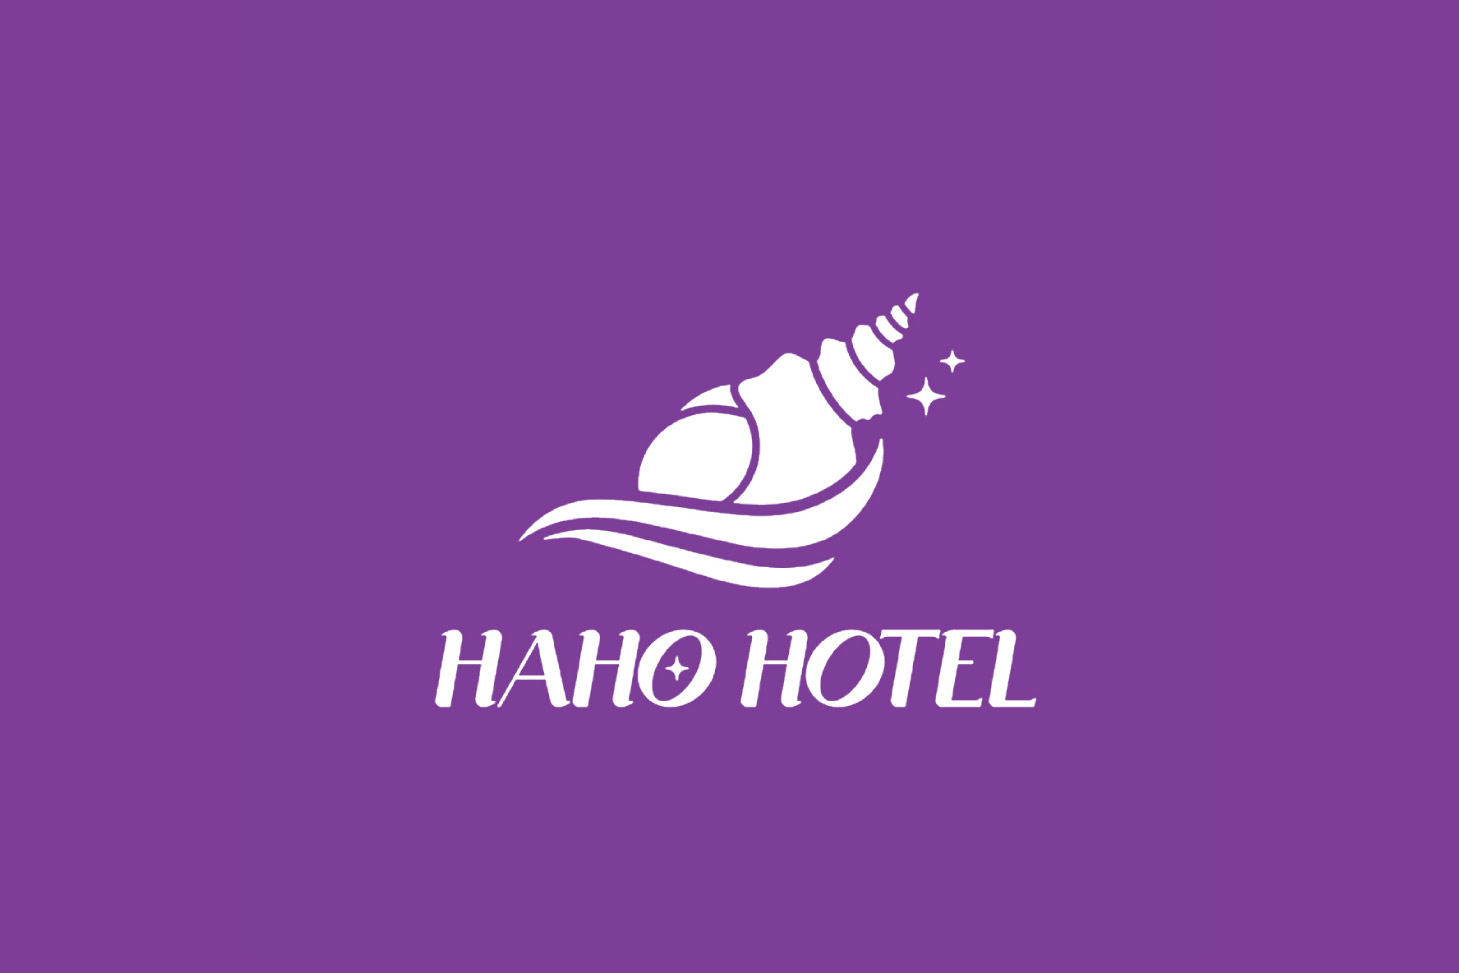 haho hotel-03.jpg